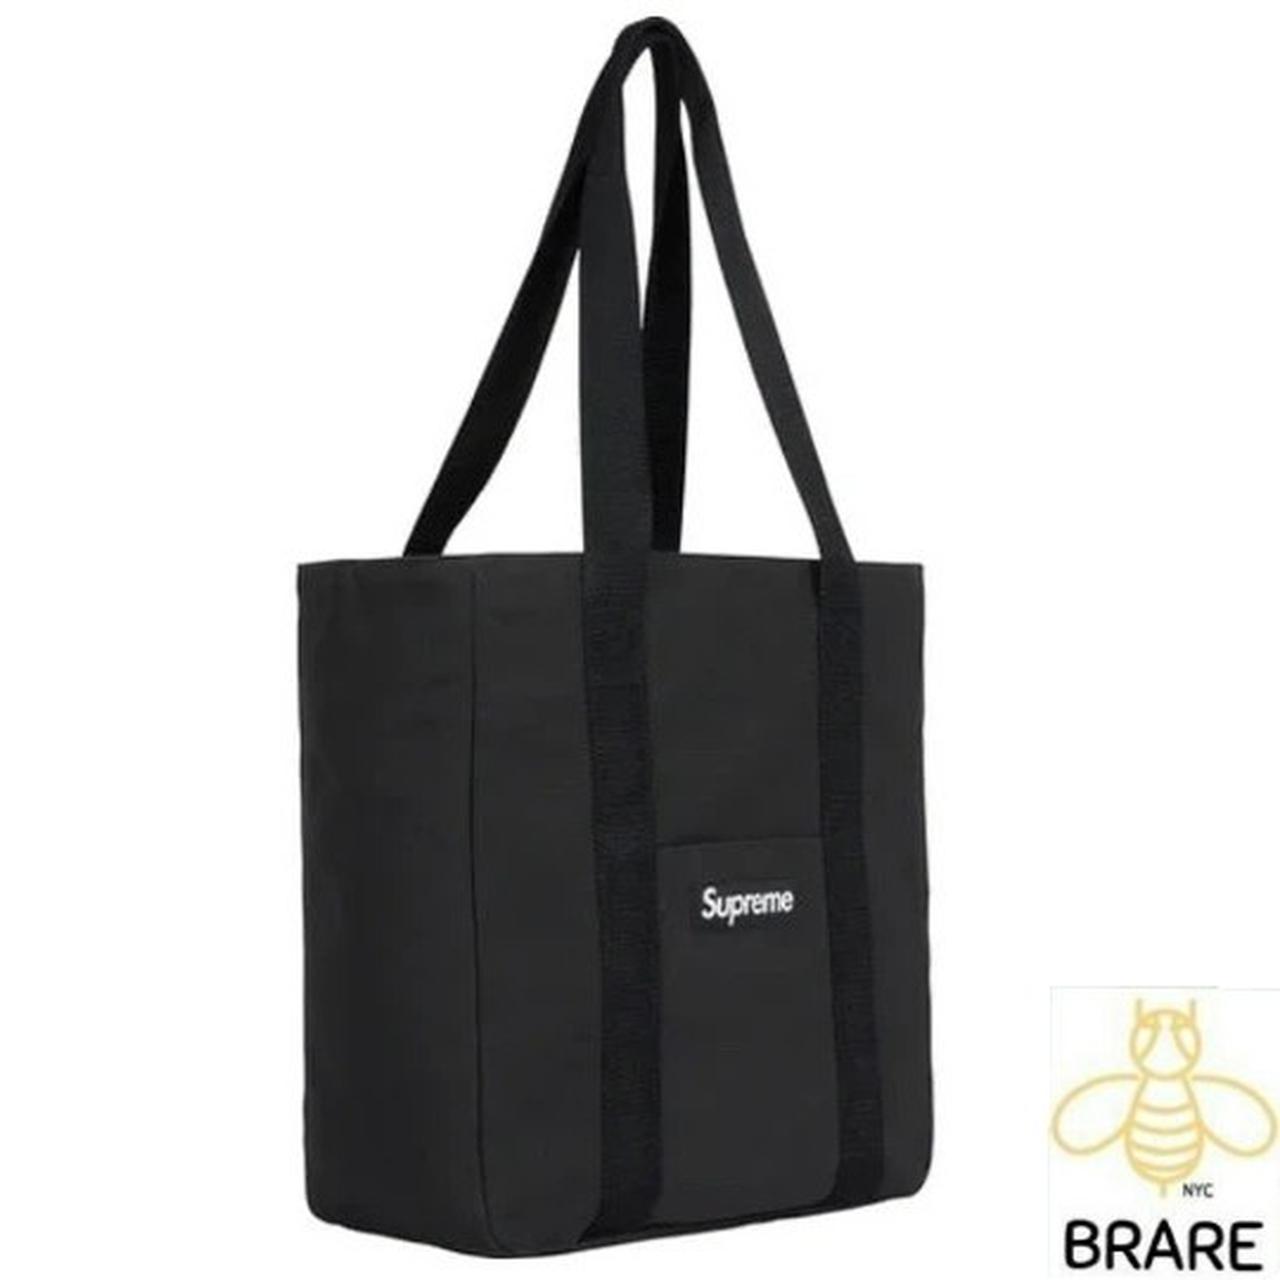 Box logo cloth bag Supreme Black in Cloth - 27317189